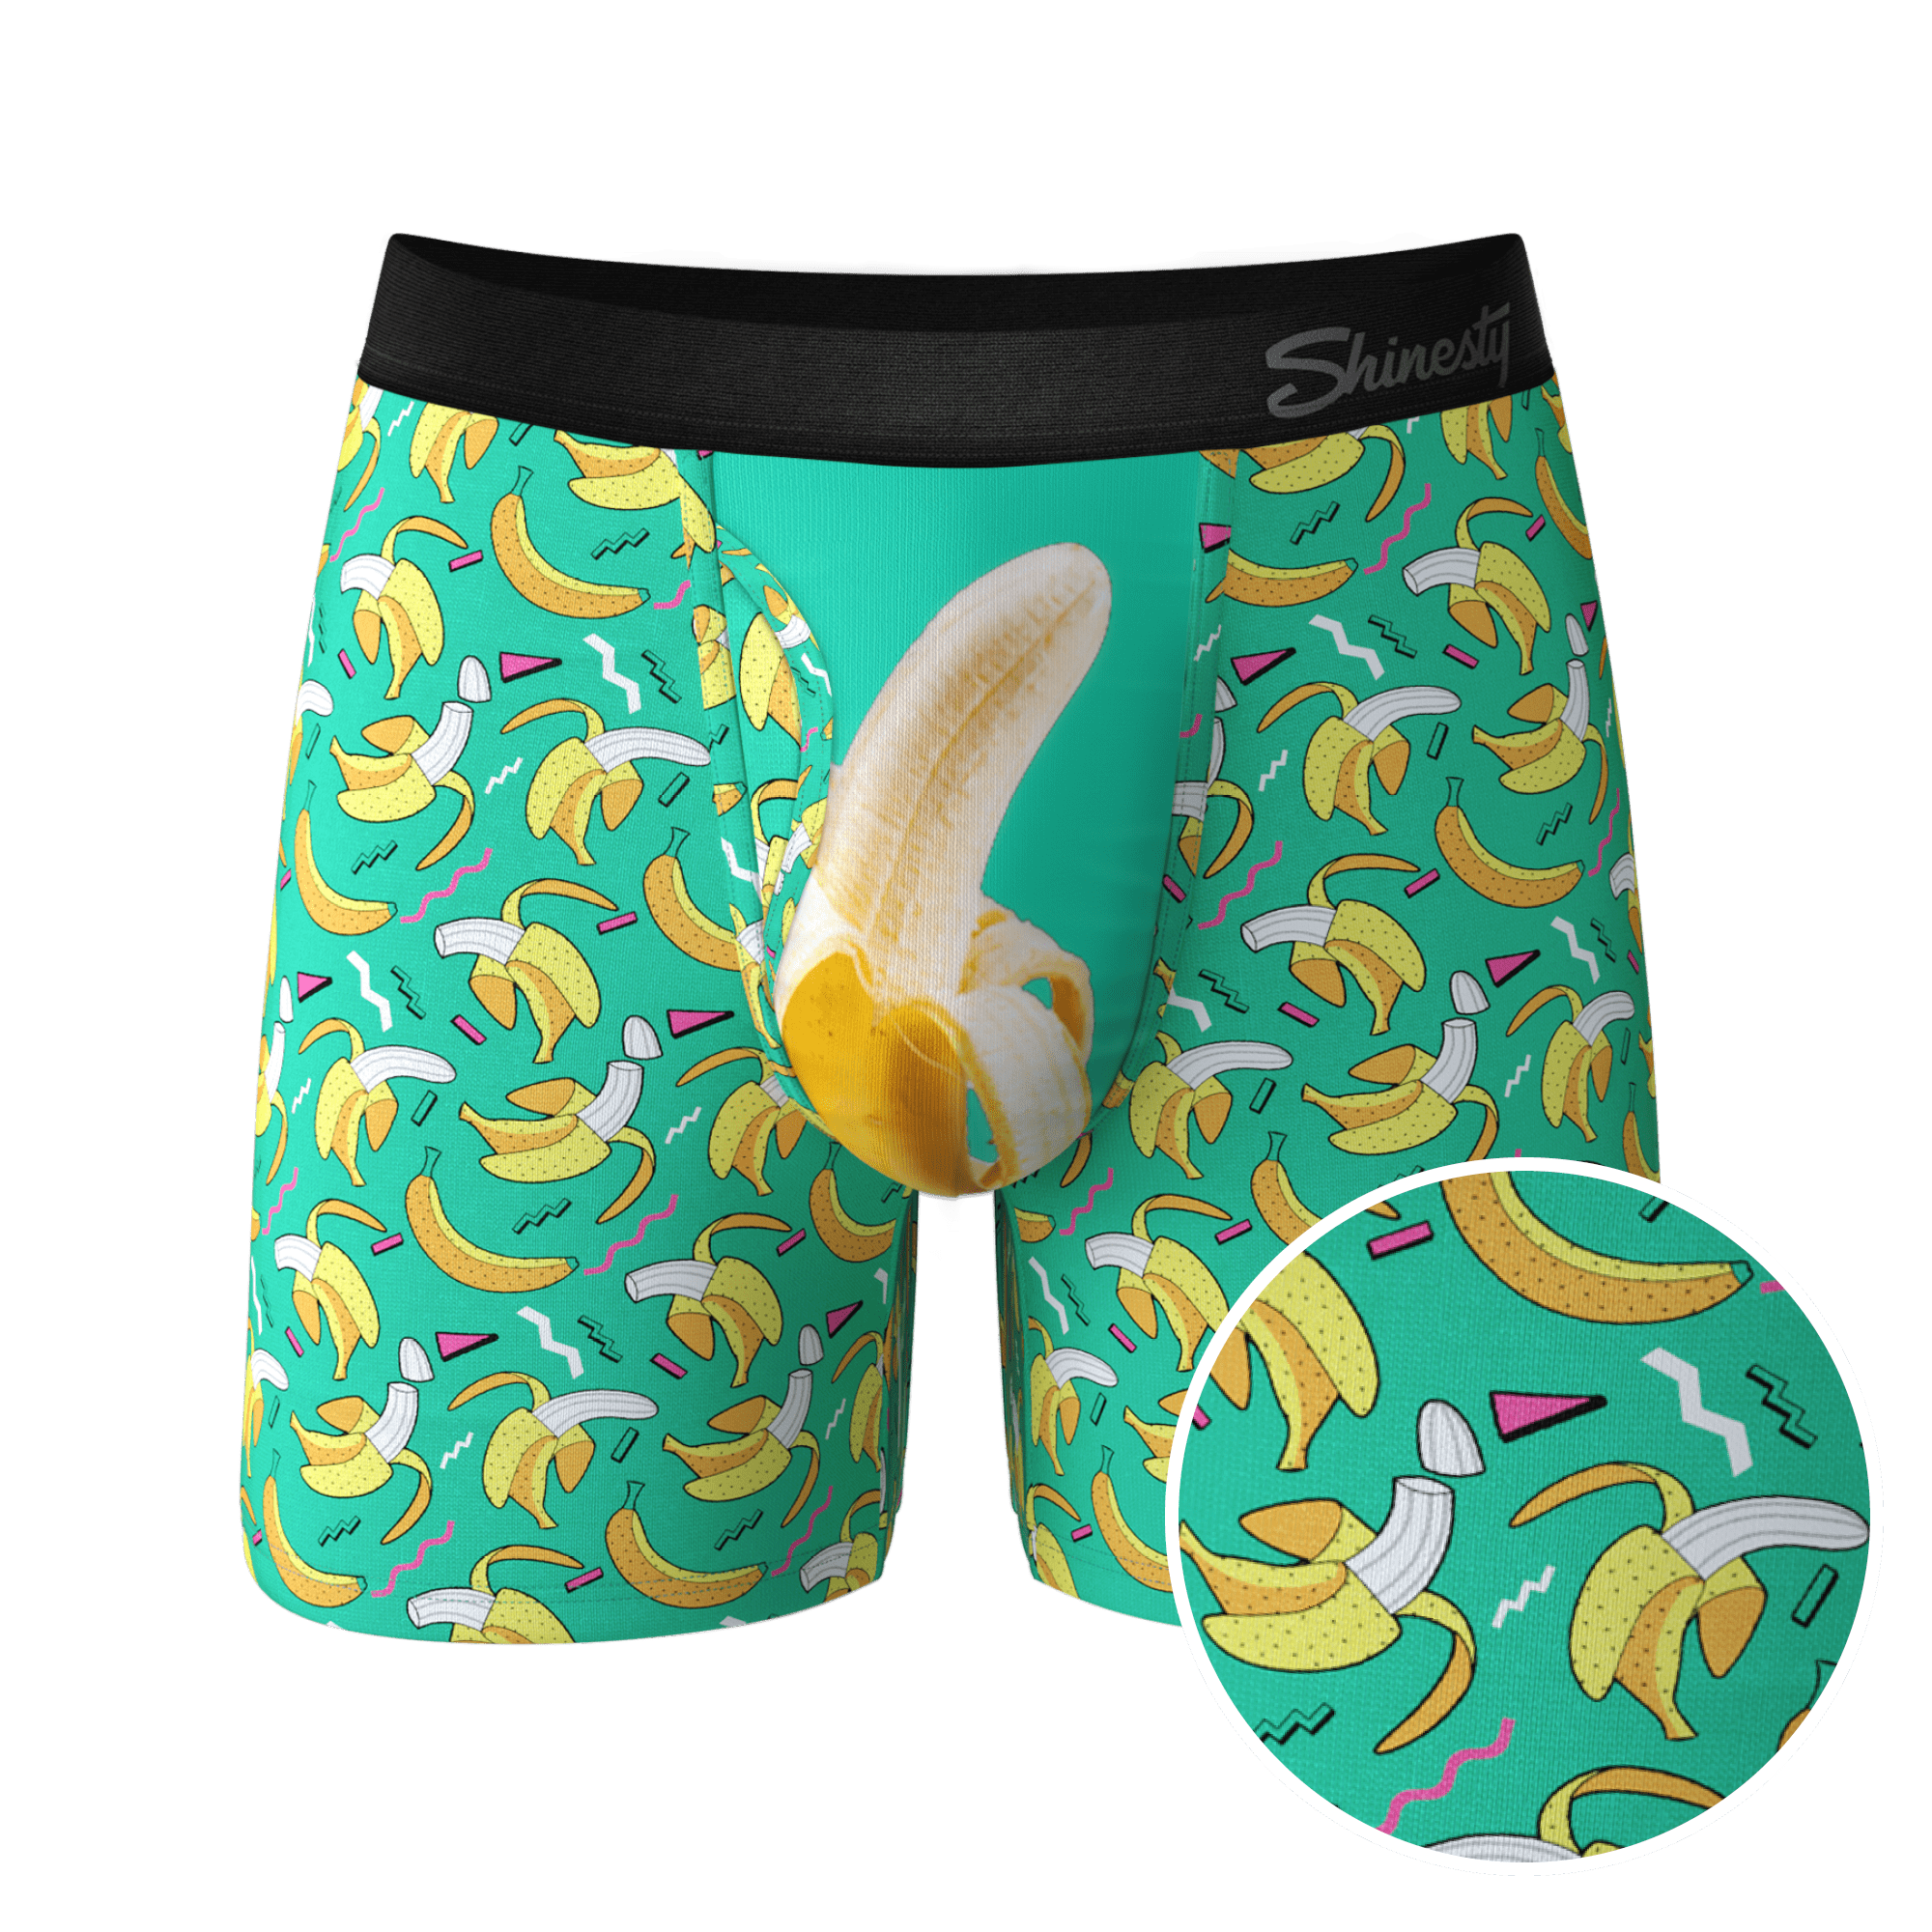 The Peel Deal - Shinesty Retro Banana Ball Hammock Pouch Underwear